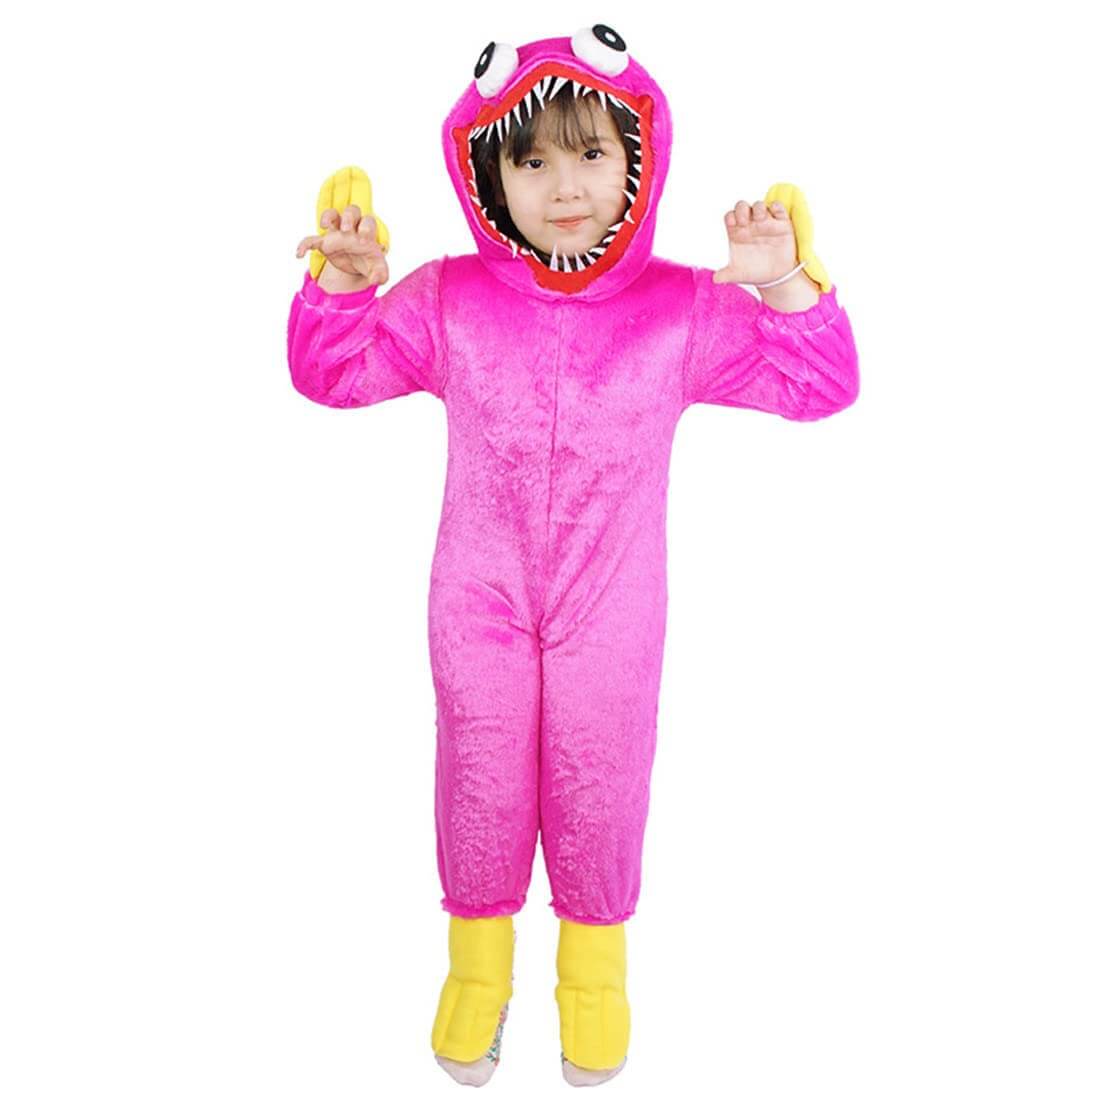 Kids Hagi Wagi Blue Costume and Pink Kissy Missy Polar Fleece Pajamas Game Cosplay Outfit